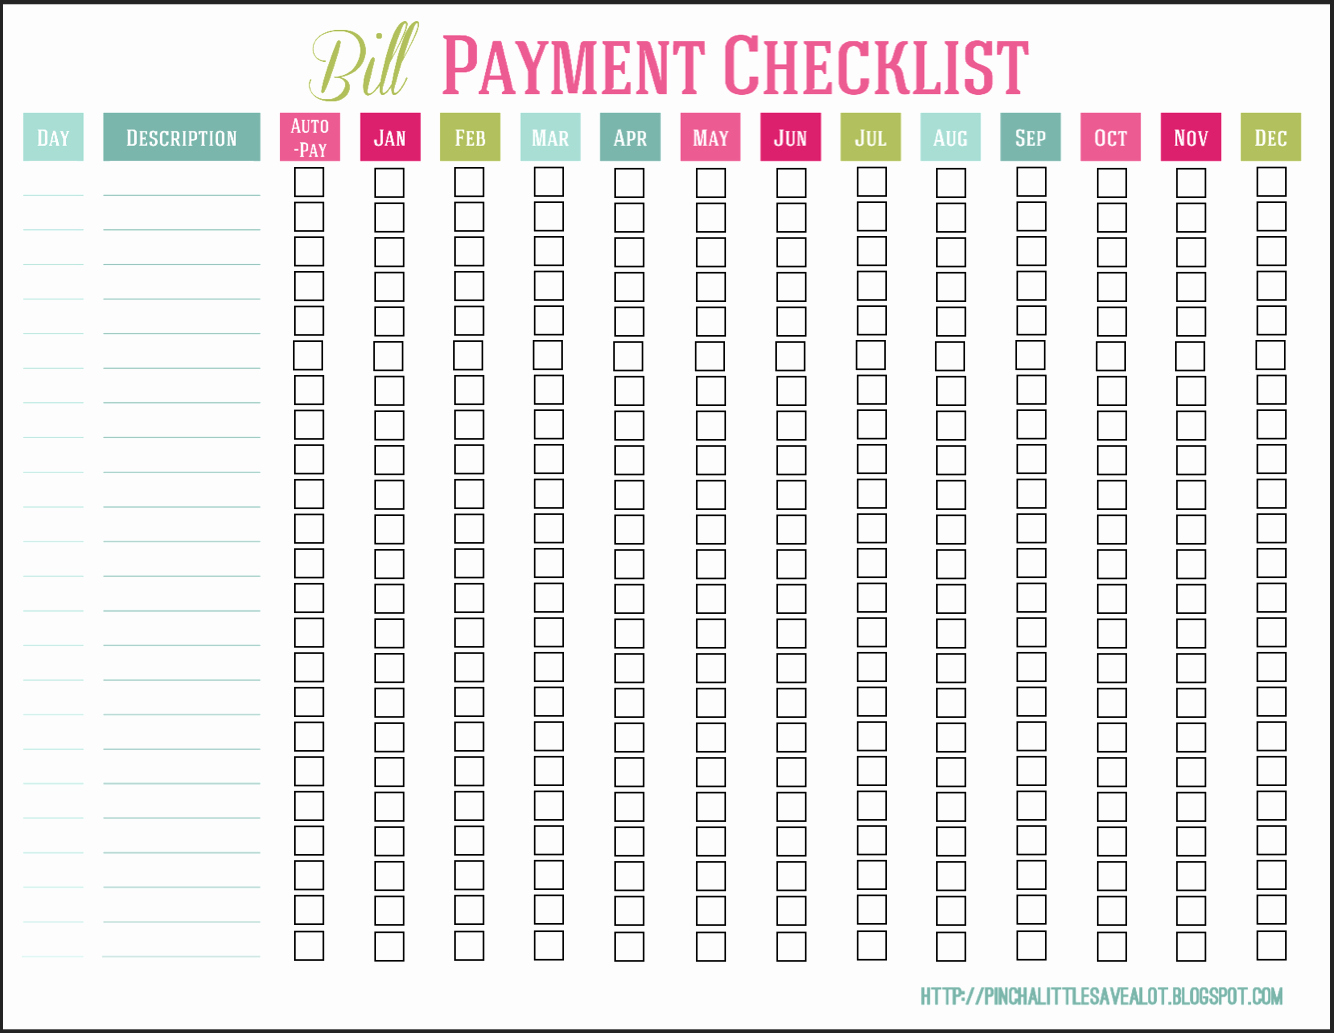 Bill Pay Checklist Template Lovely Bill Payment Checklist Home organization